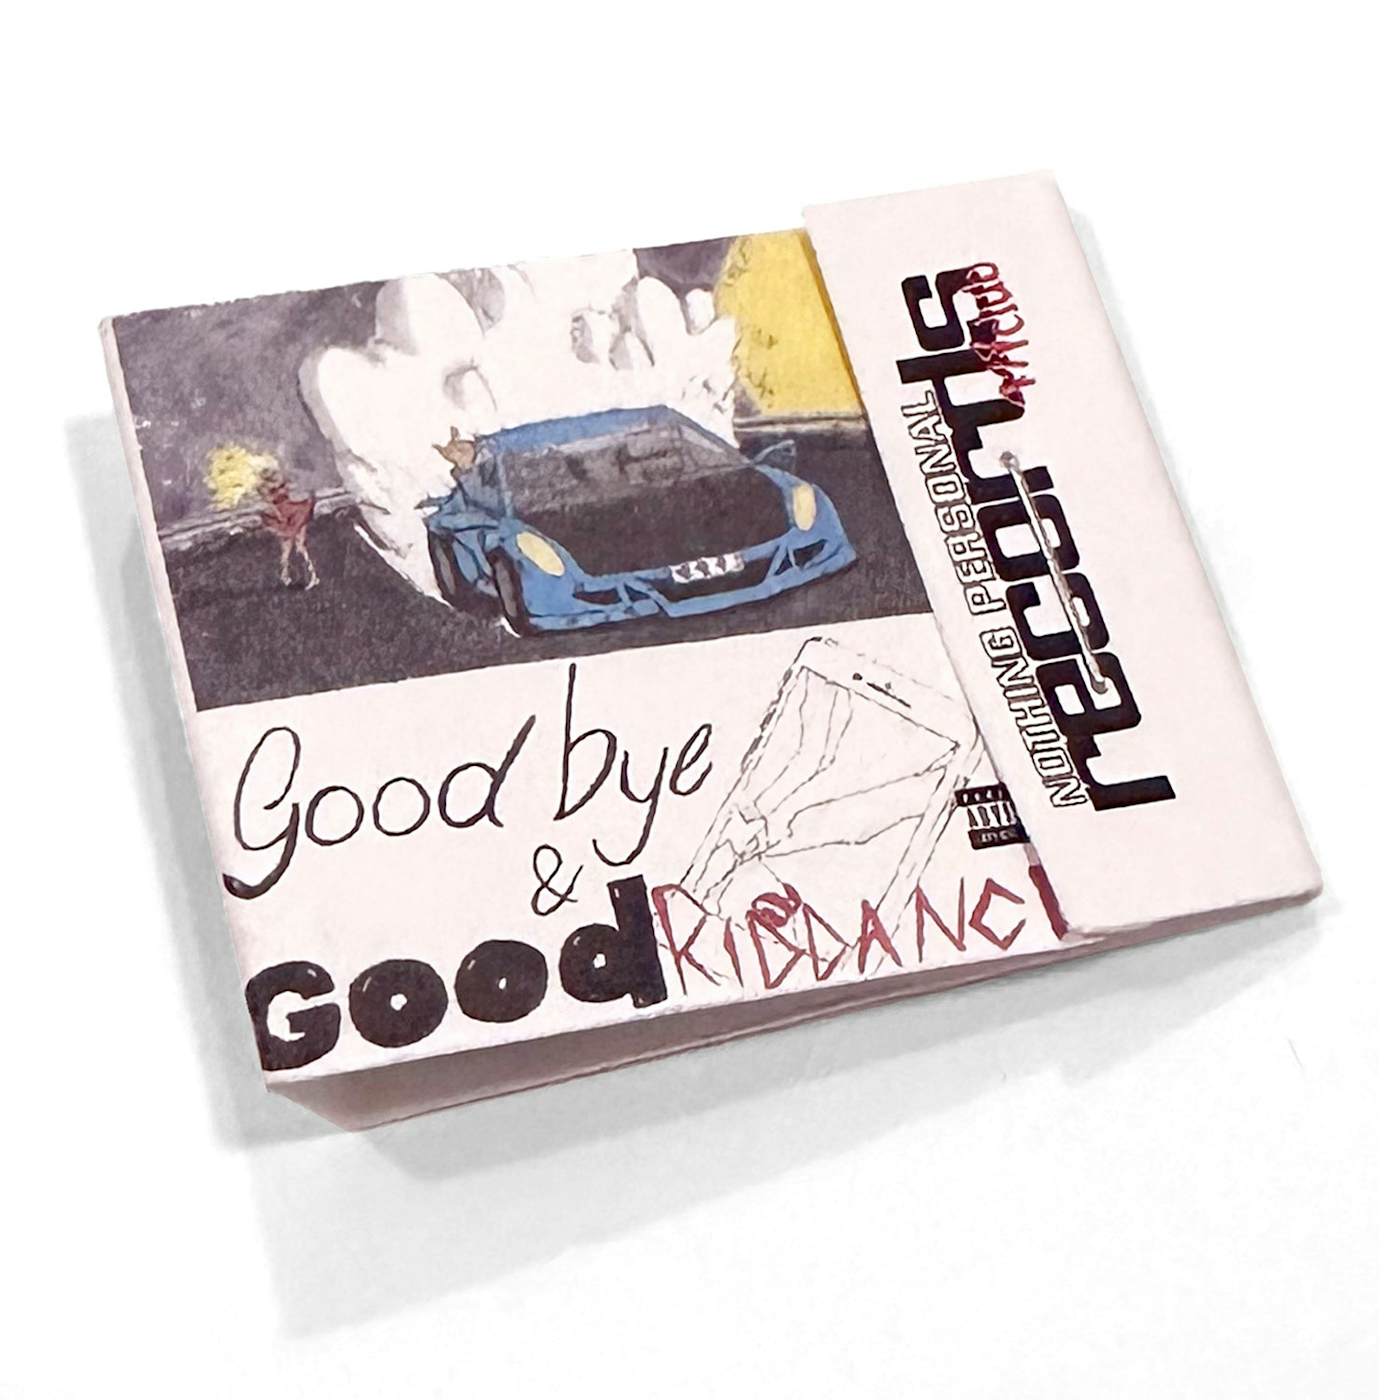 Juice WRLD Goodbye & Good Riddance 5th Anniversary Deluxe Edition 2LP